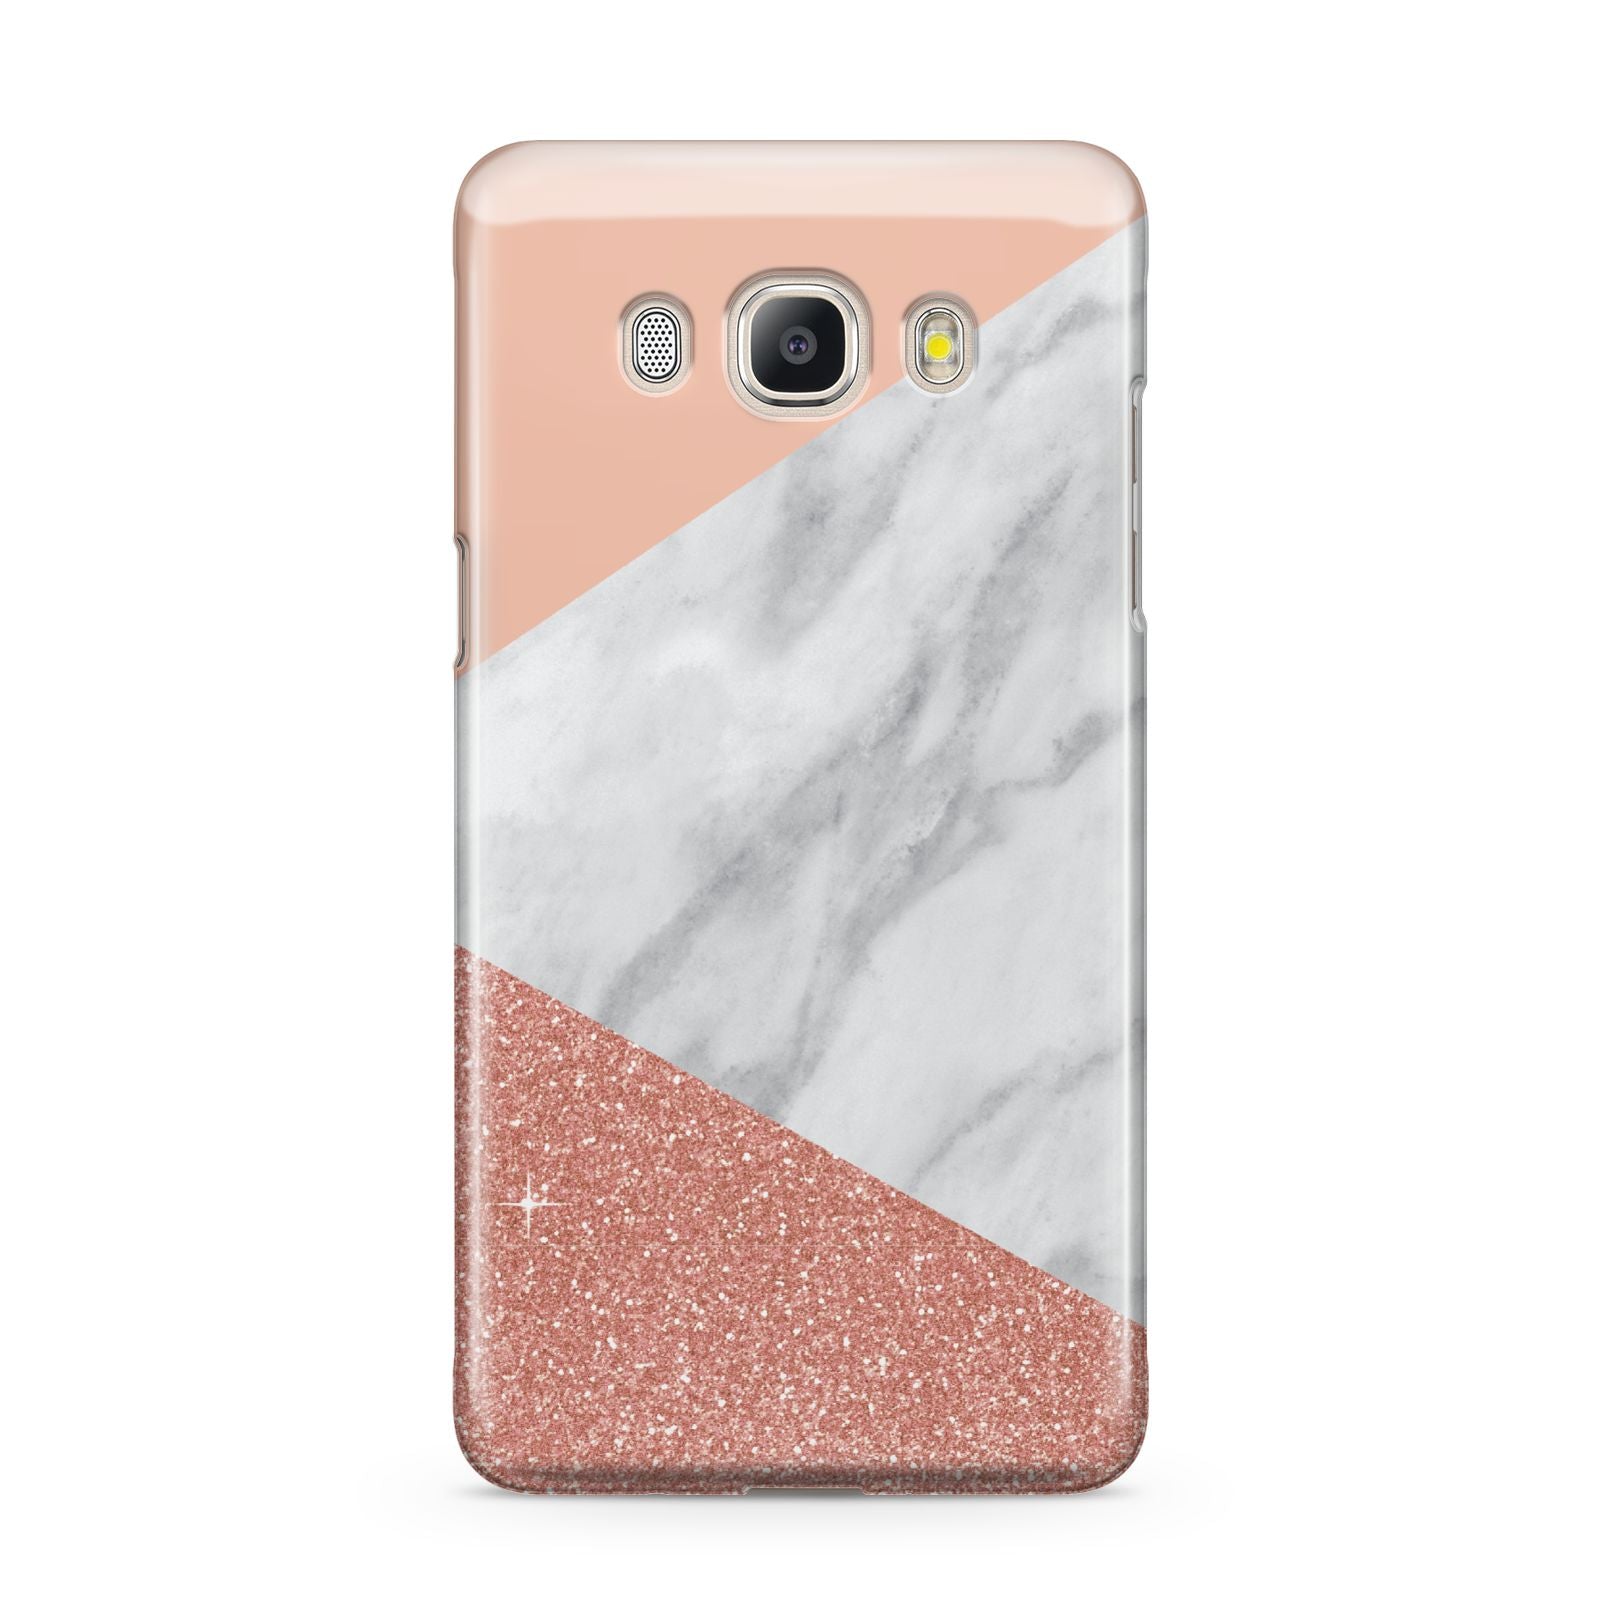 Marble White Rose Gold Samsung Galaxy J5 2016 Case